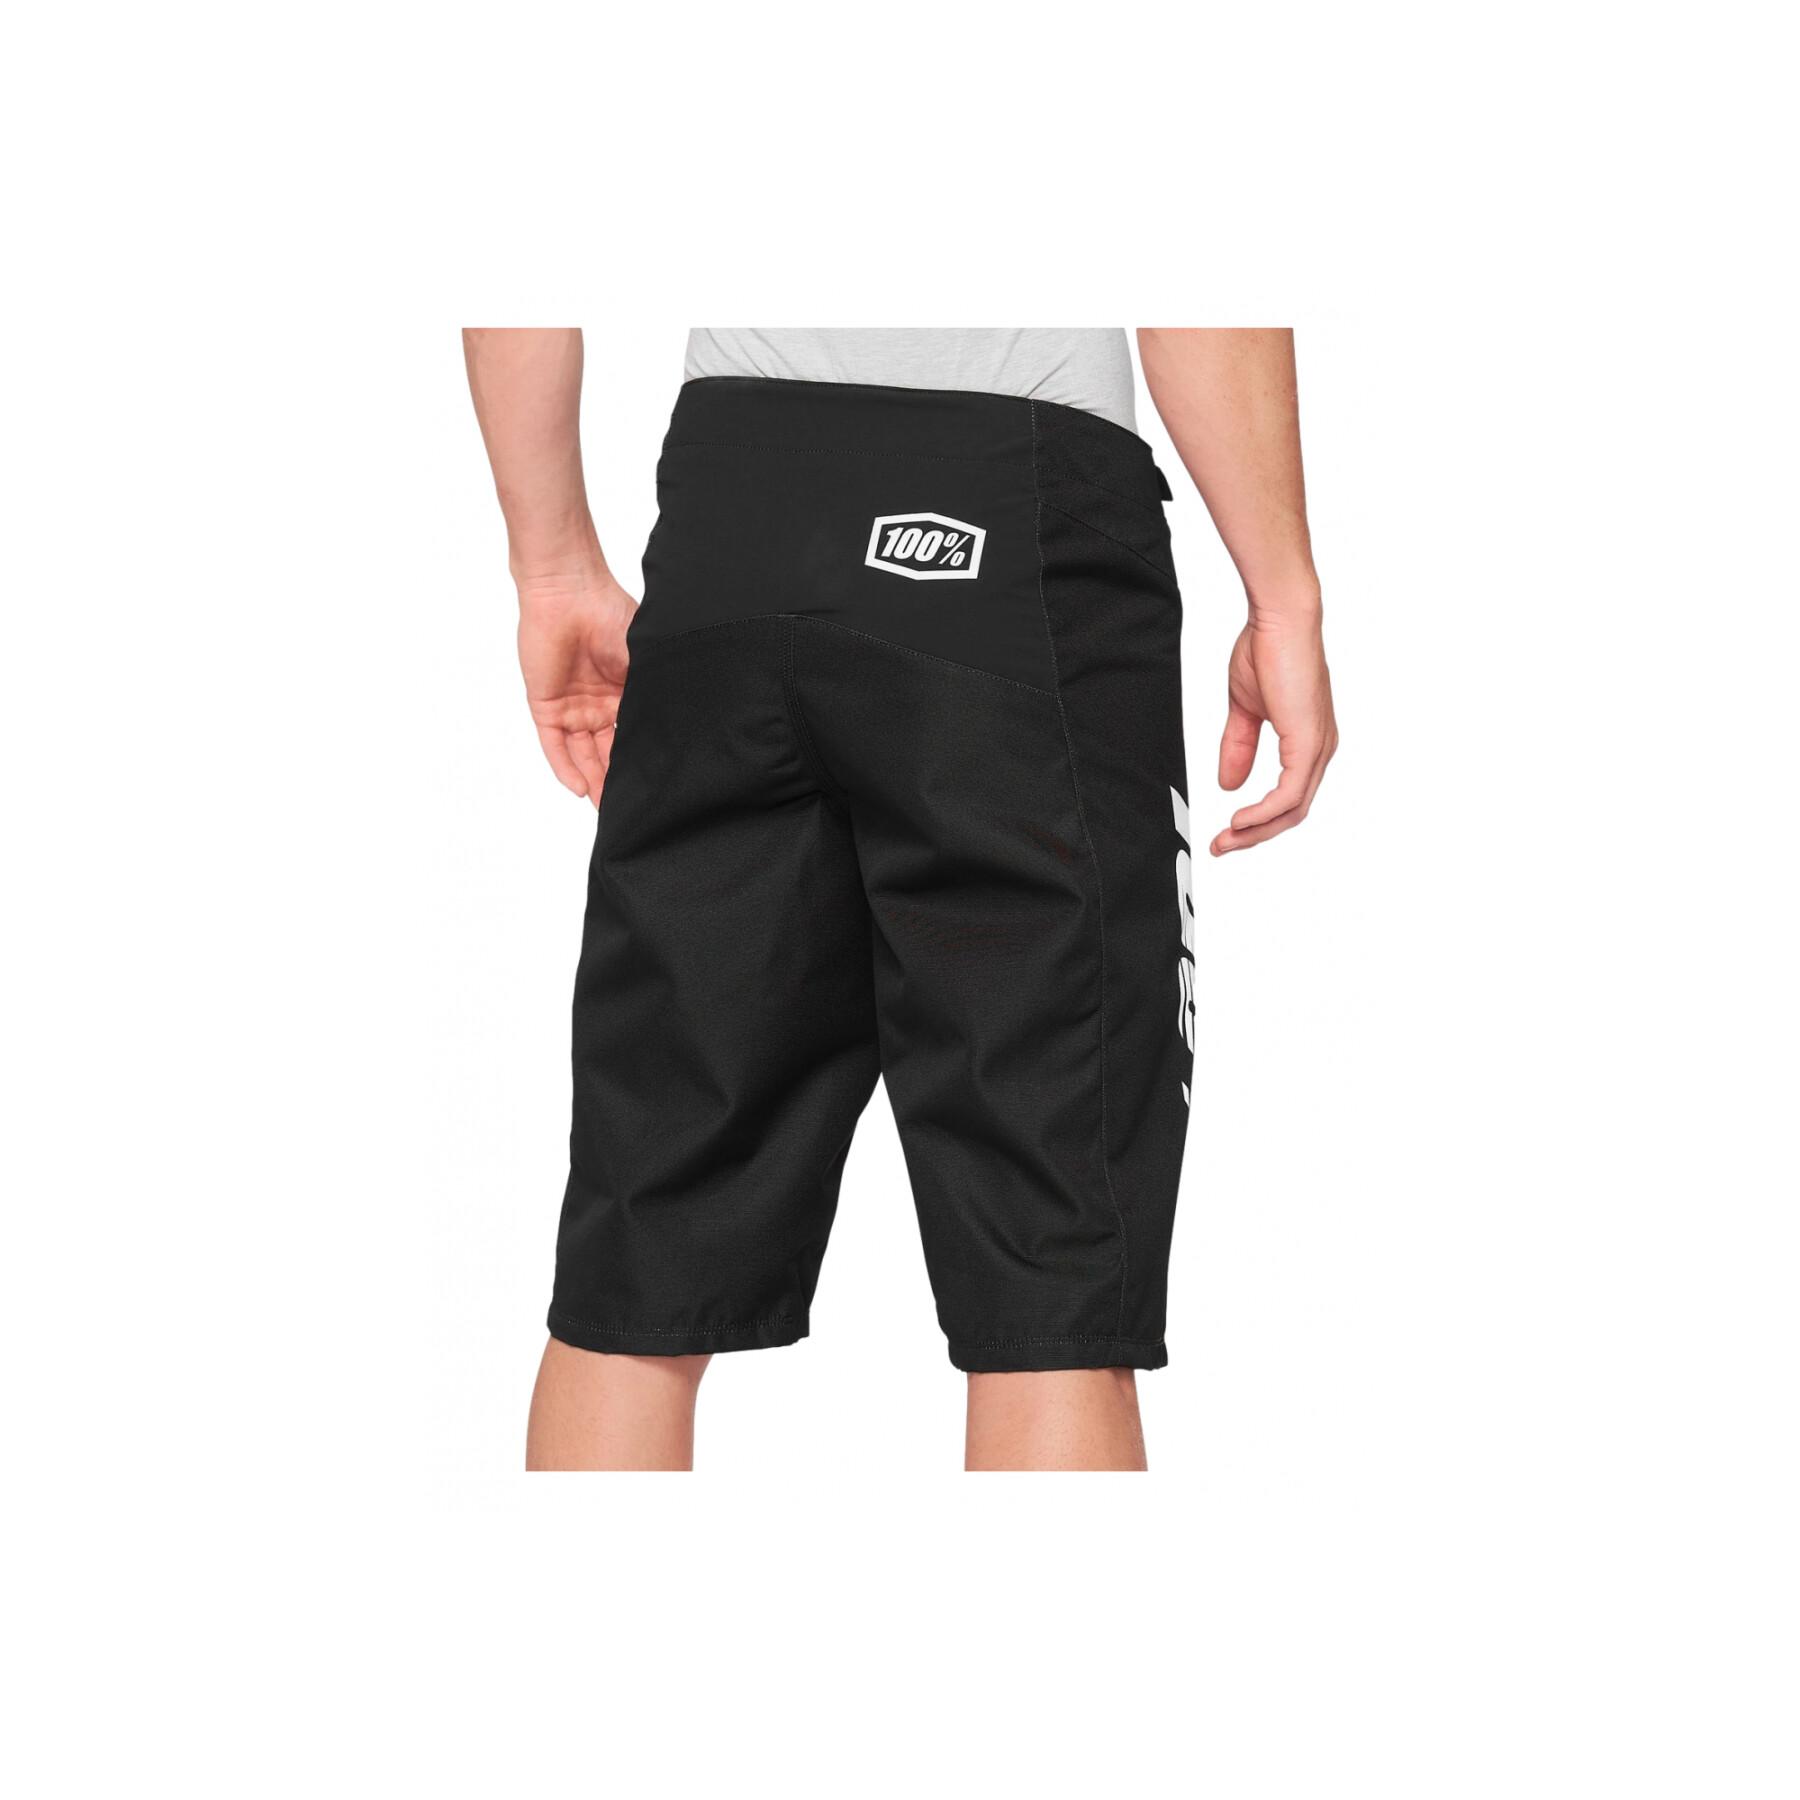 Kinder shorts 100% R-Core Sp21